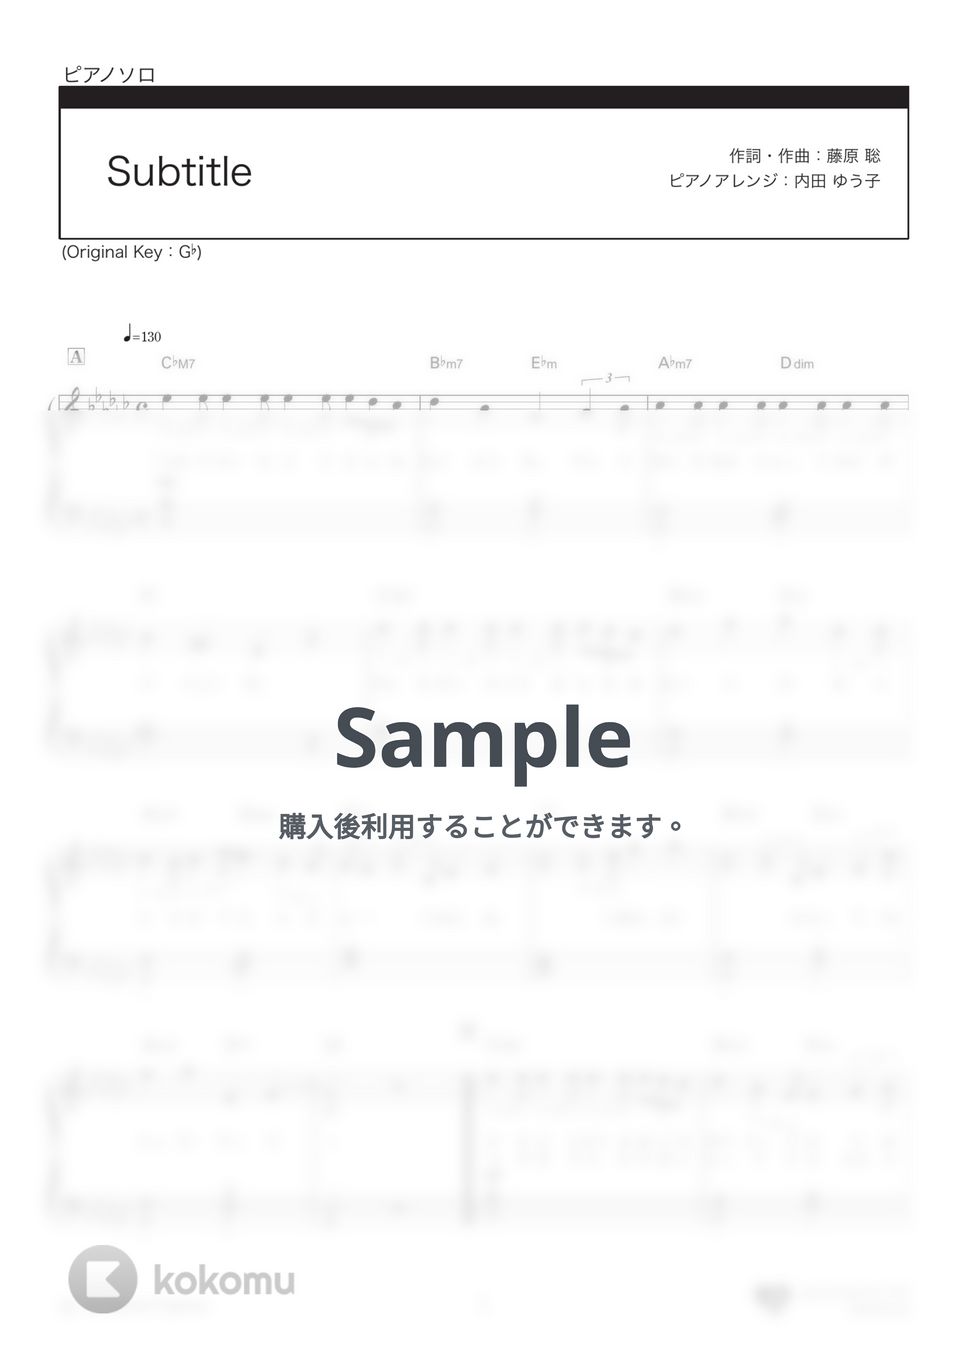 Official髭男dism - Subtitle (オリジナルキー/TVドラマ『silent』主題歌) by 楽譜仕事人_内田ゆう子